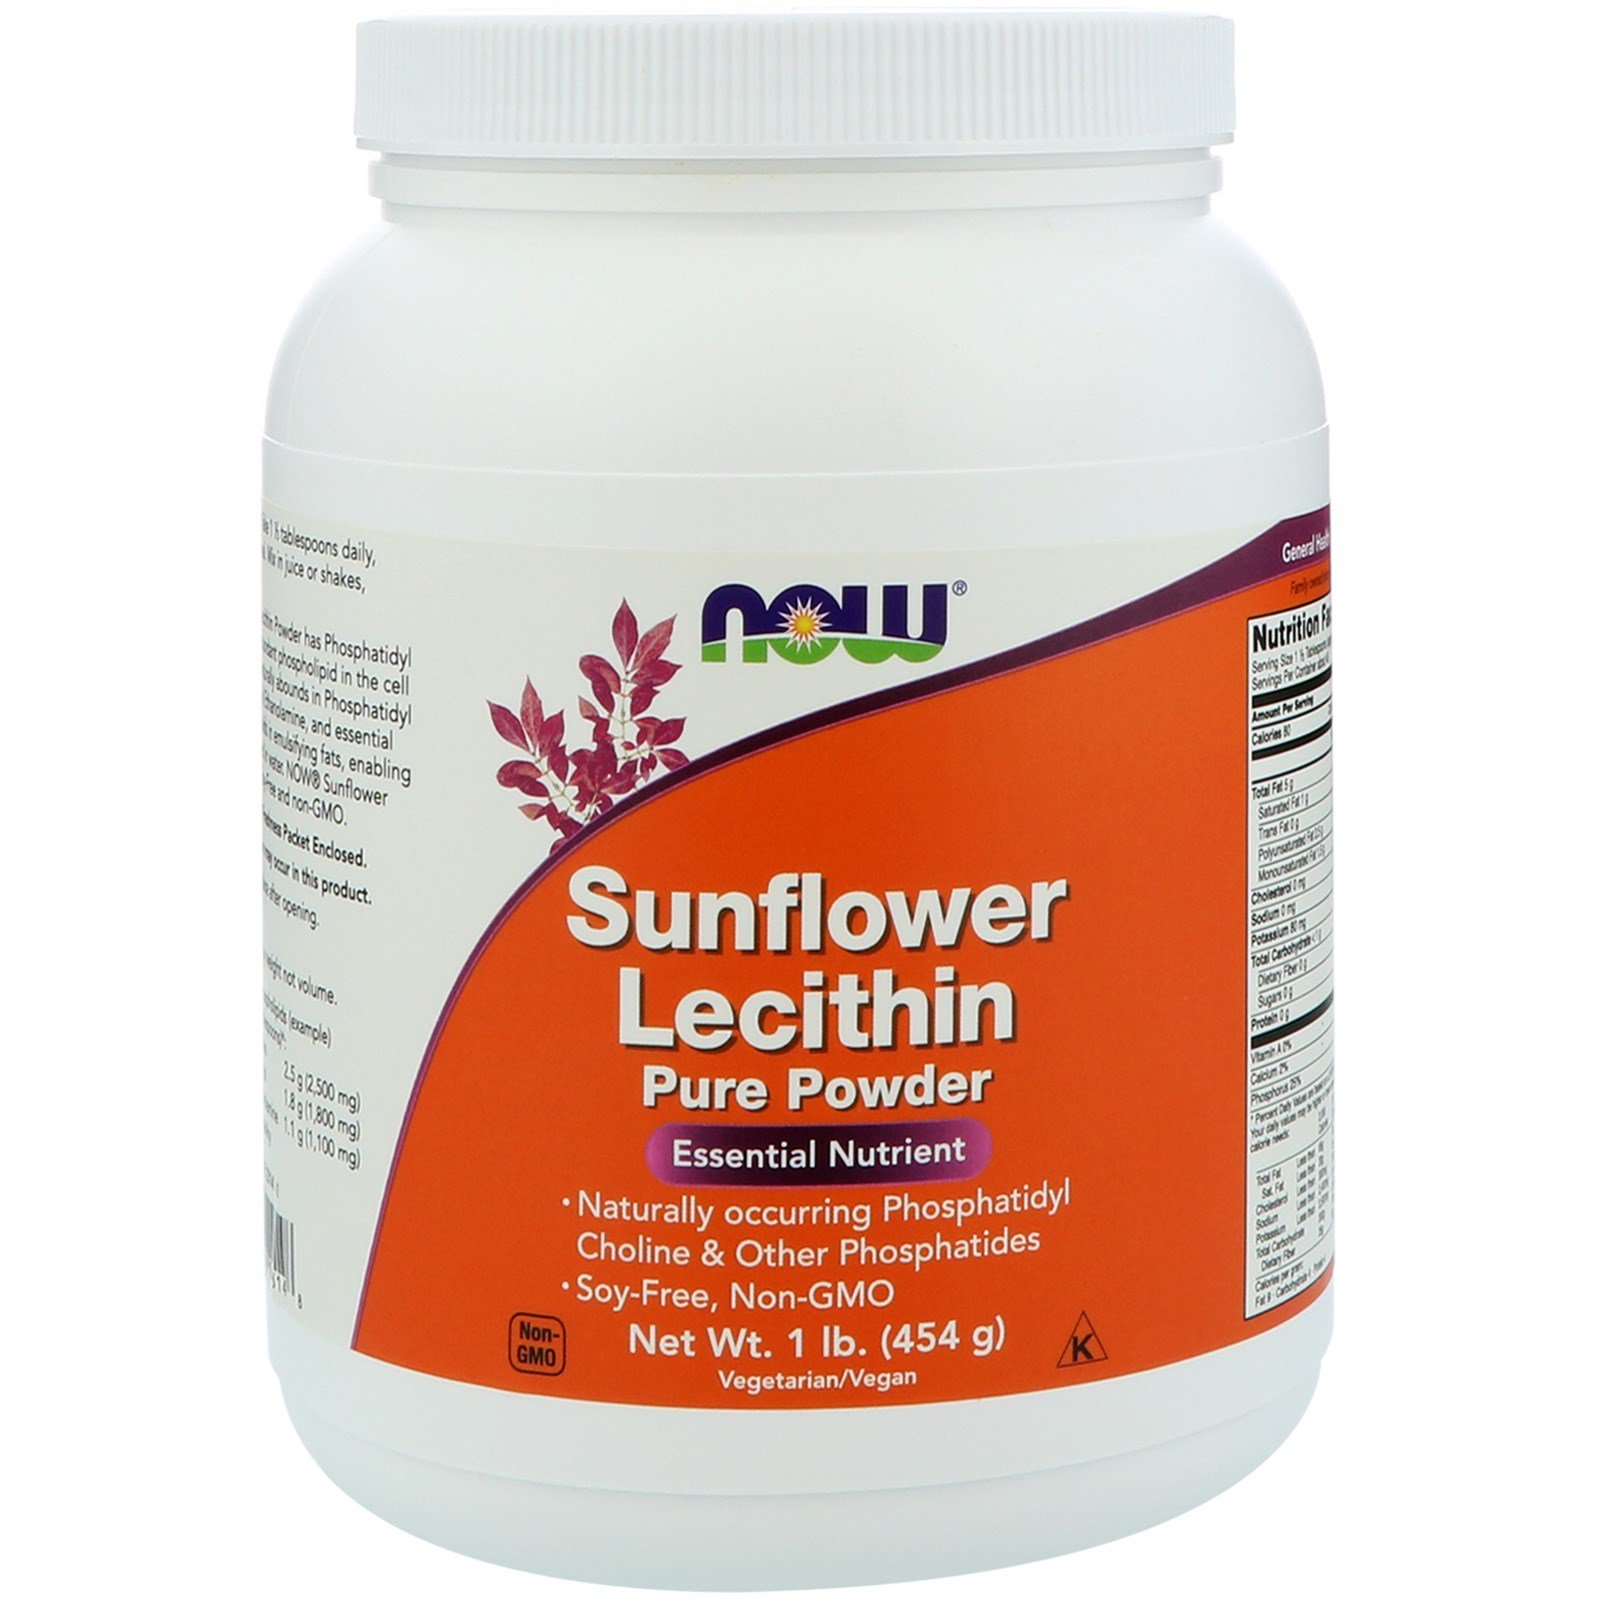 Lecithin Sunflower Powder, Лецитин Подсолнечника, Порошок - 454 г